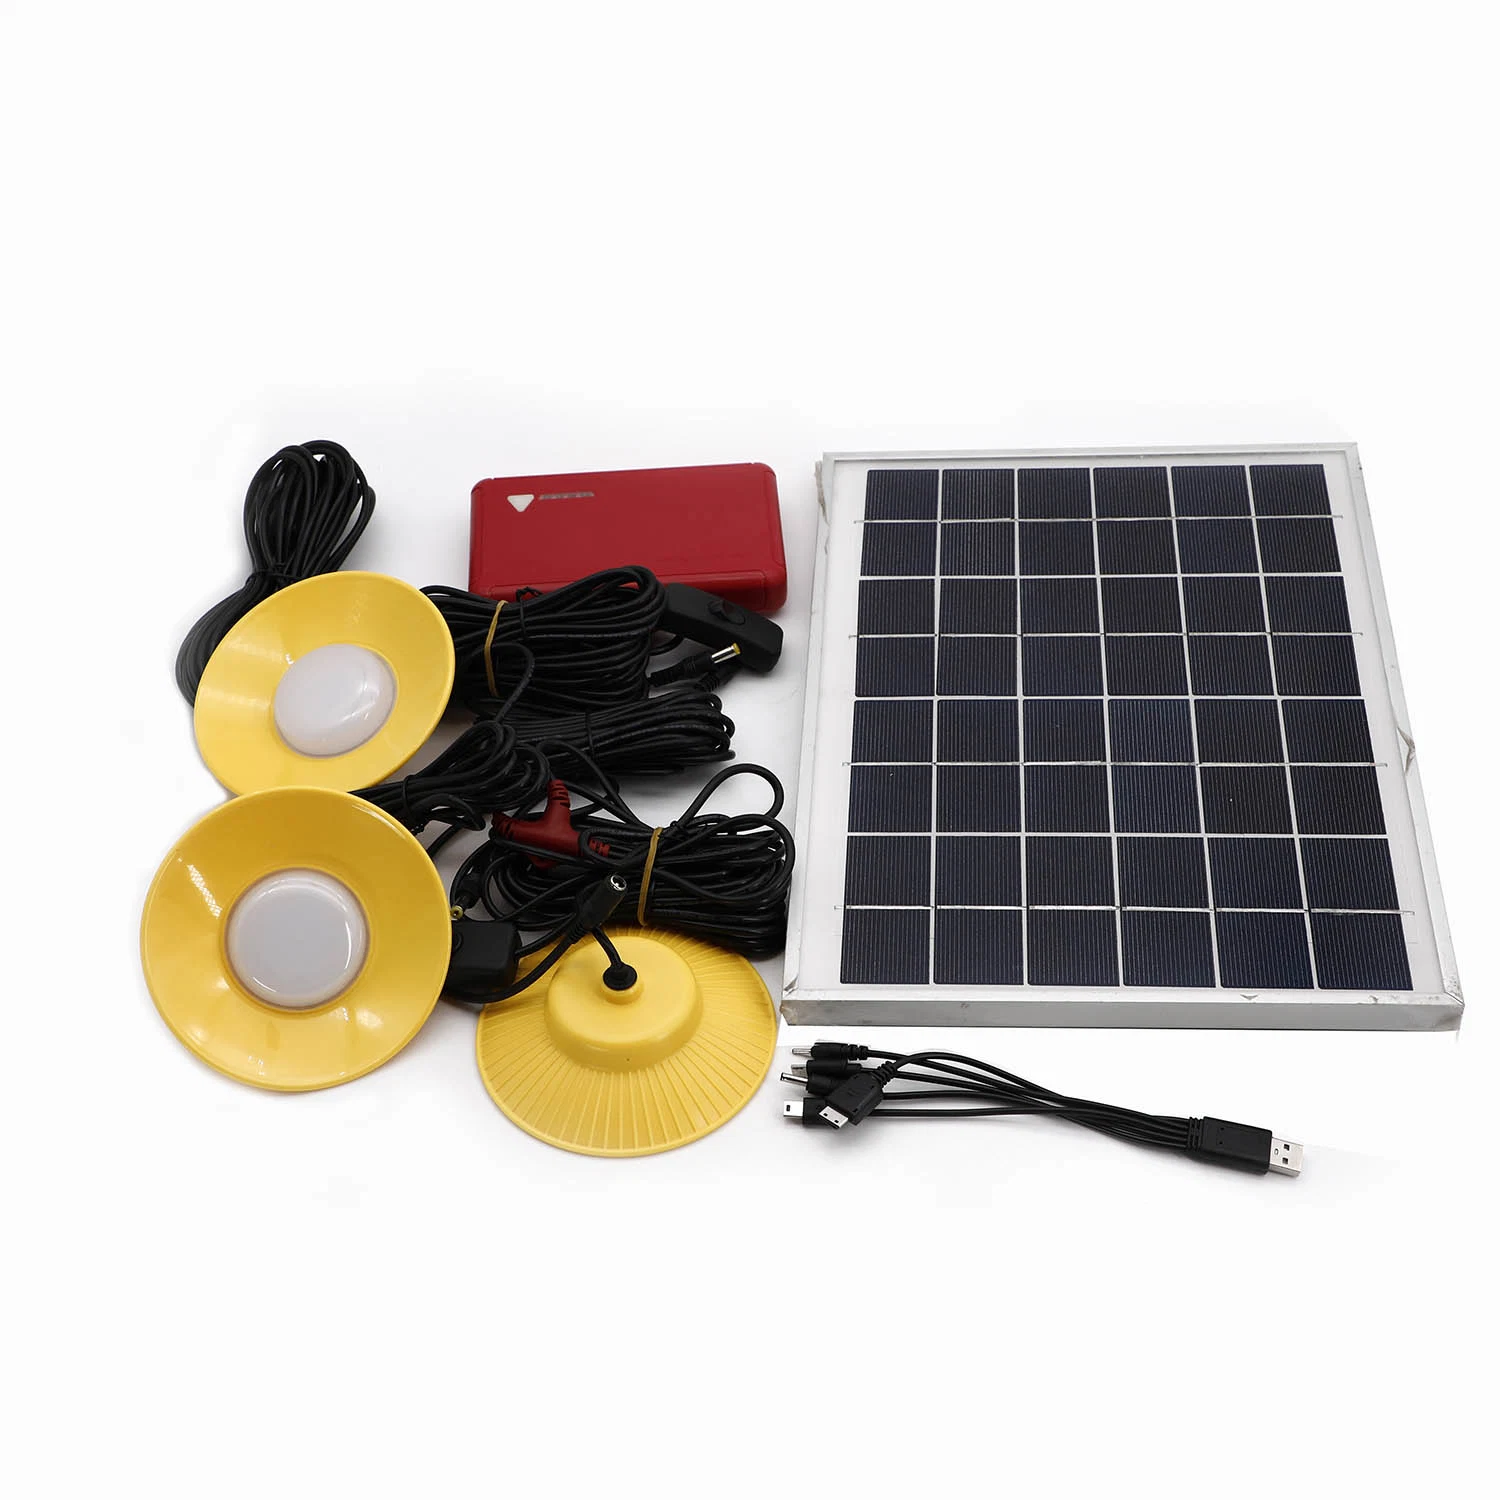 5200mAh Li-Ion Battery Backup 10W Notfälle Home Use Beleuchtung Solar LED-Beleuchtungssystem Kit Light mit Panel-Stromversorgung